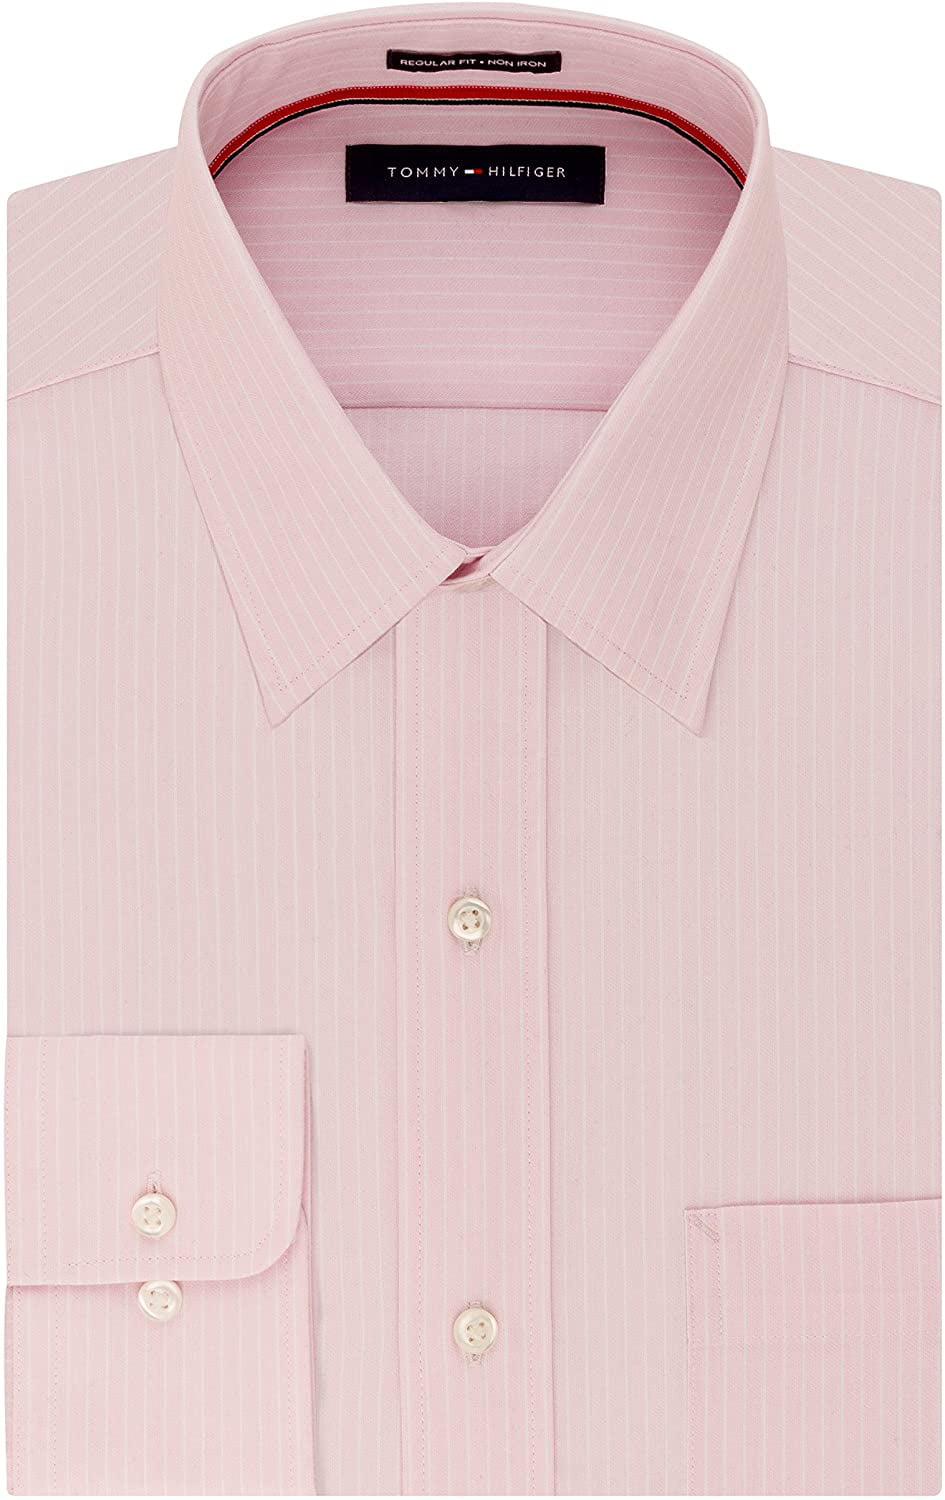 Tommy Hilfiger Mens Dress Shirt Regular Fit Non Iron Banker Stripe 